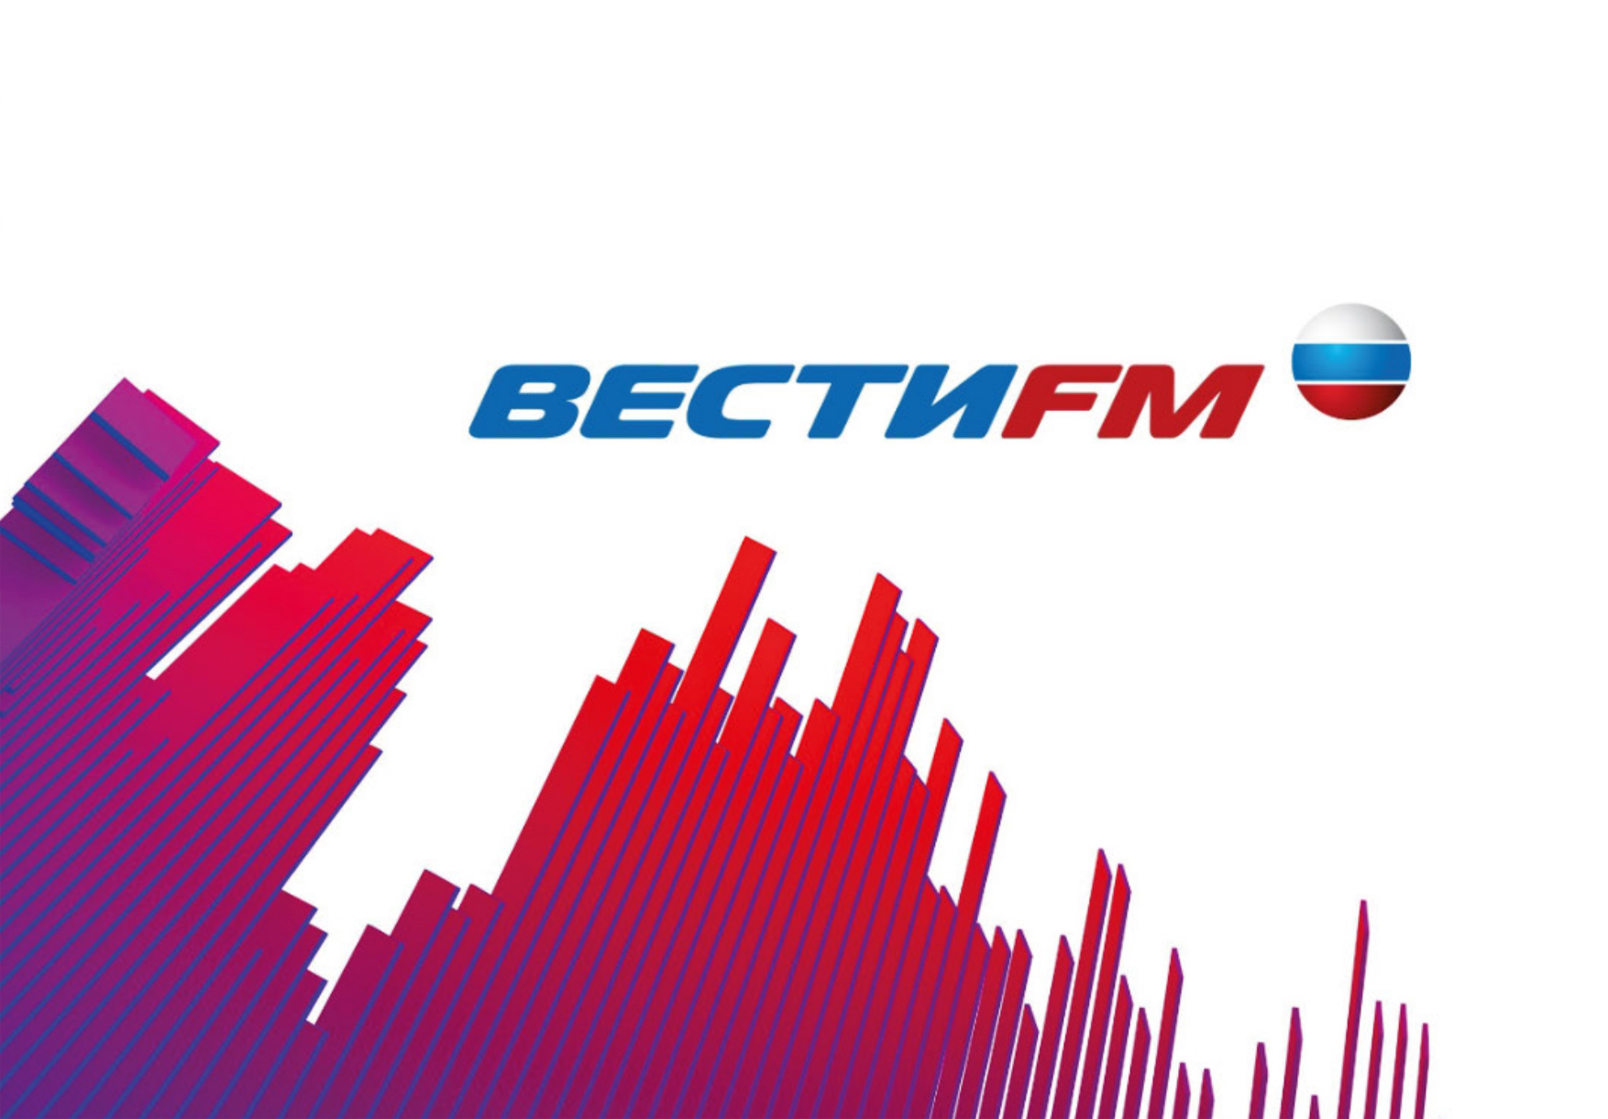 Dtcnb av. Вести ФМ. Вести fm логотип. Логотип радиостанции вести ФМ. Радиоканал вести ФМ.